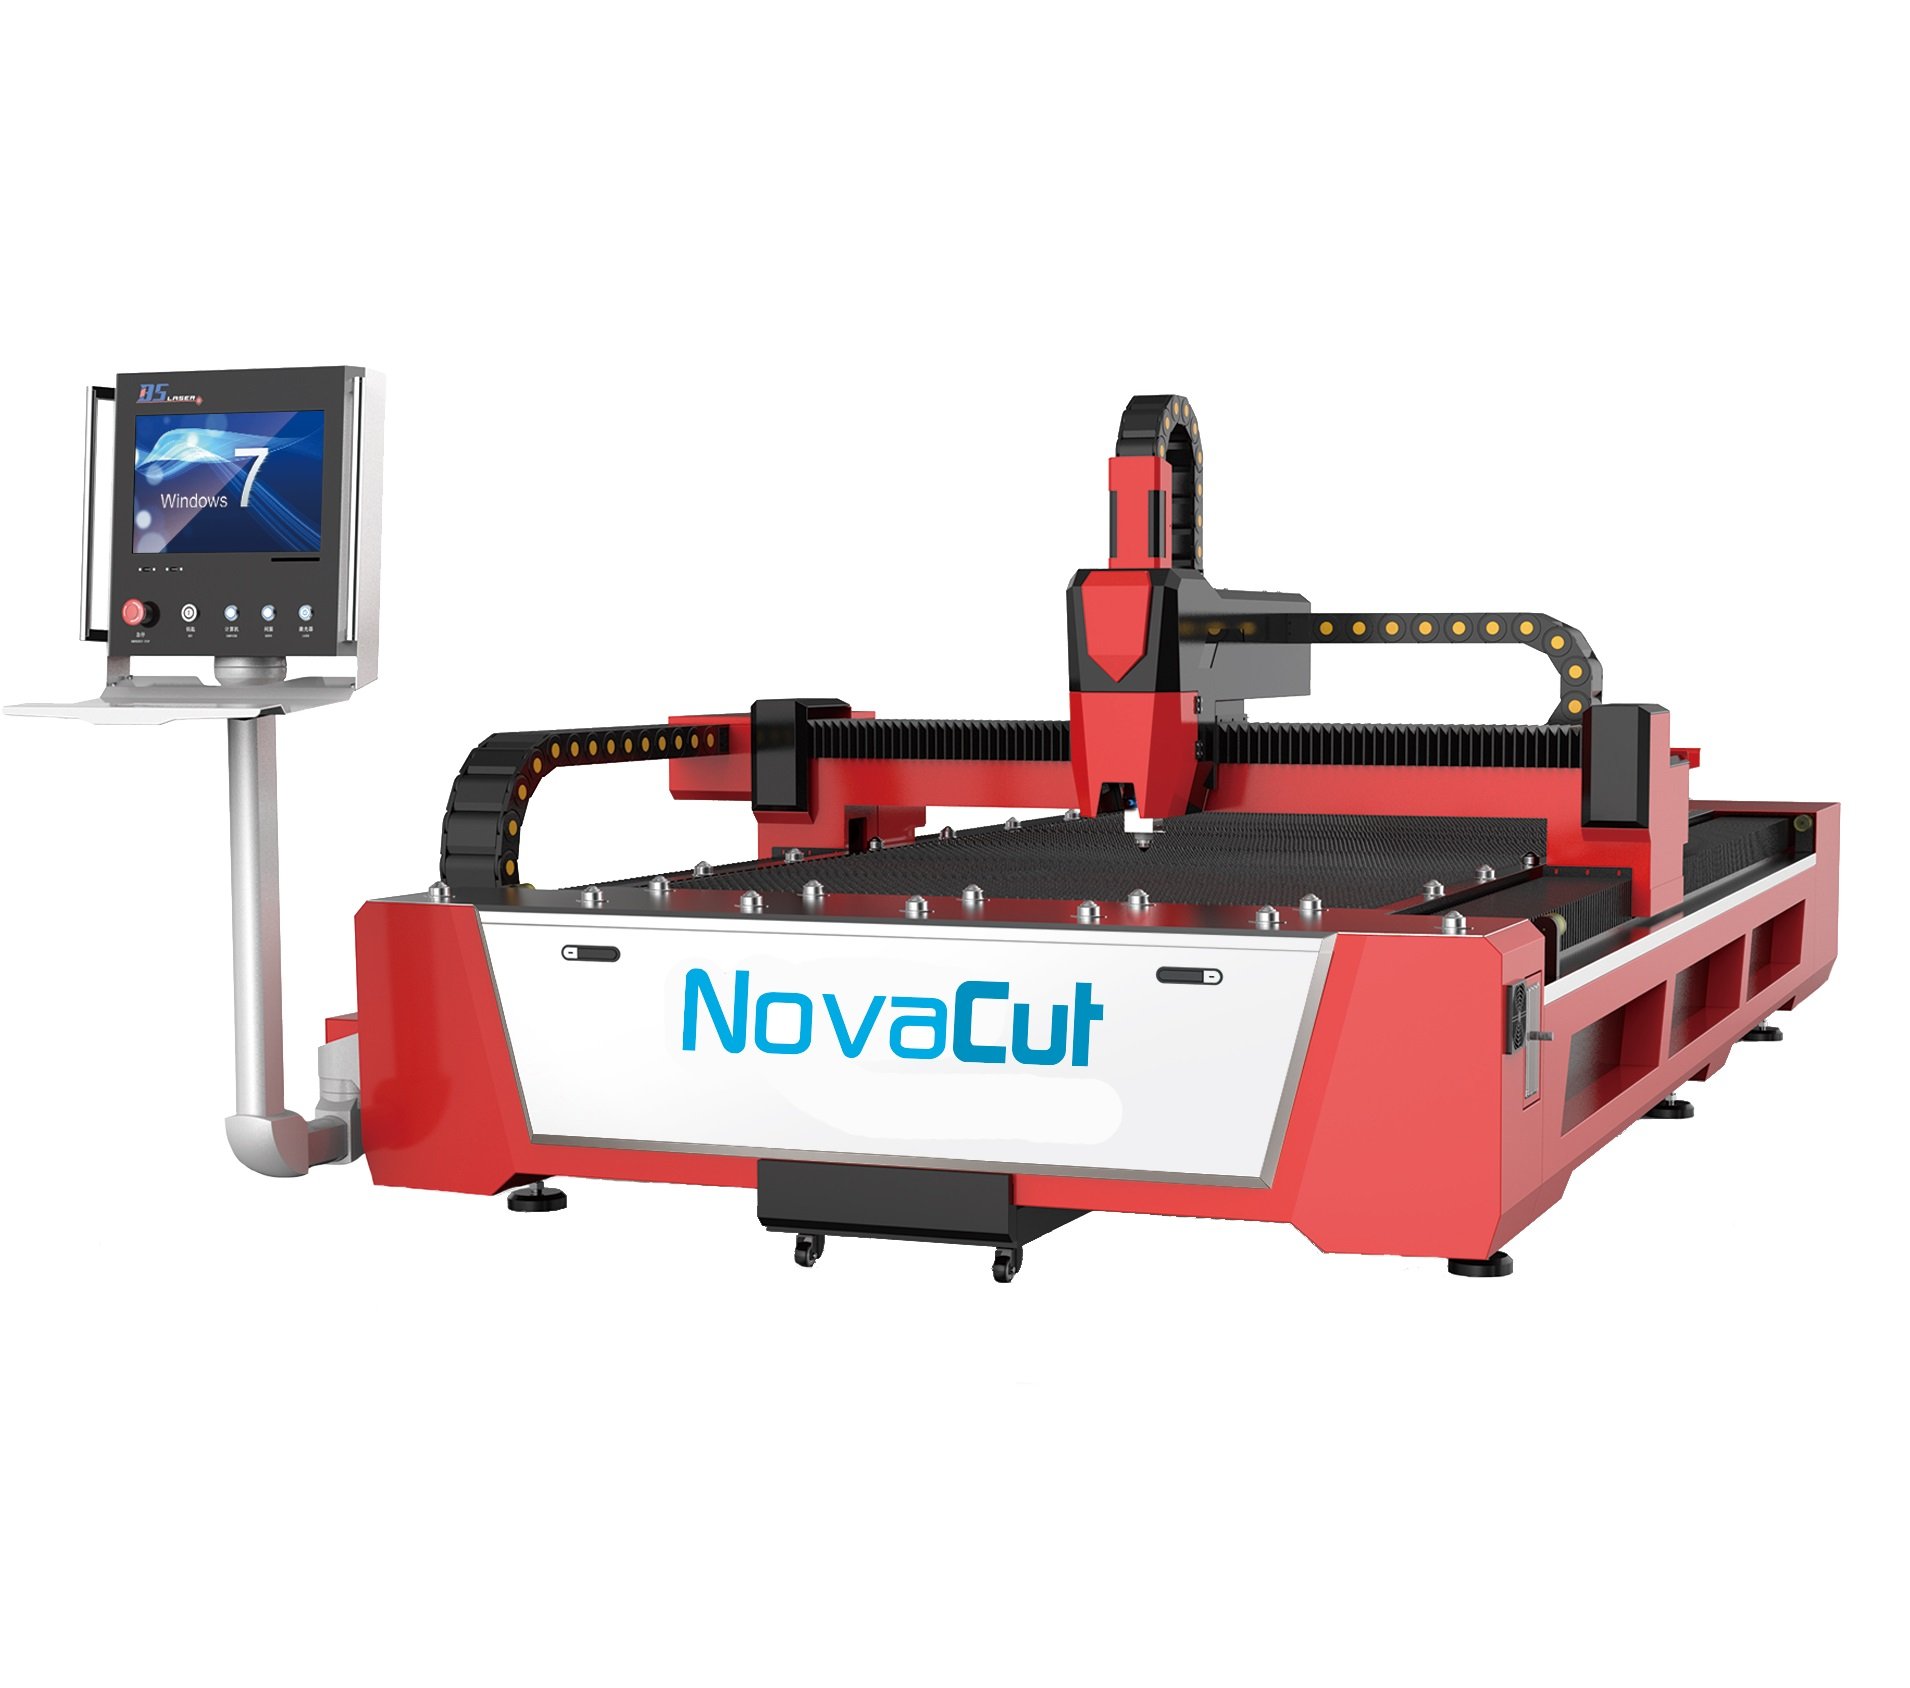  AKAD lana mquina de corte a laser de metais com tecnologia de fibra ptica: Novacut Laser F3015